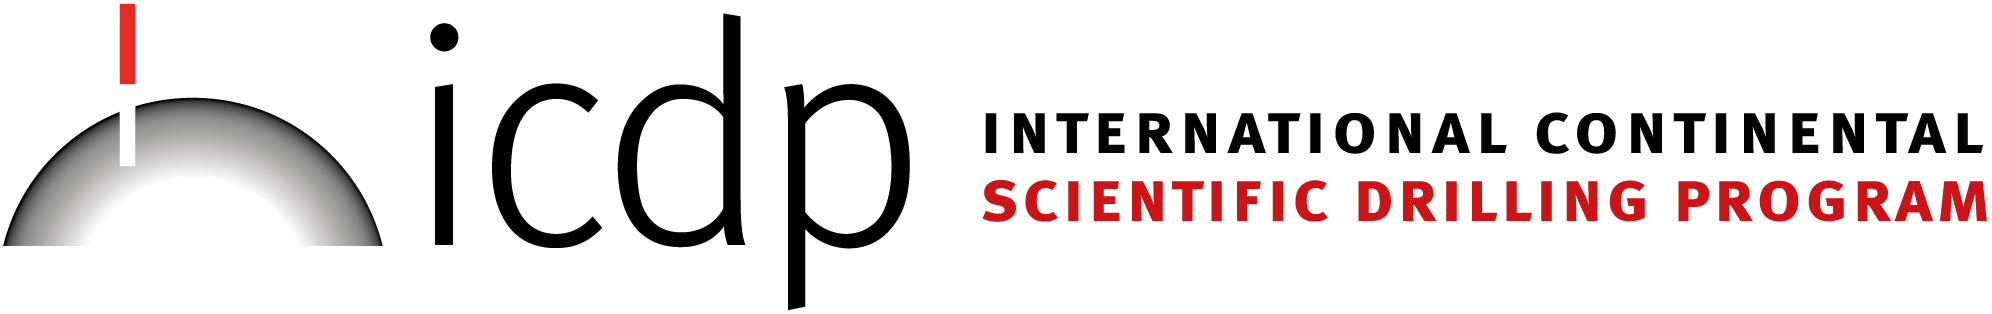 Logo for International Continental Scientific Drilling Program (ICDP)